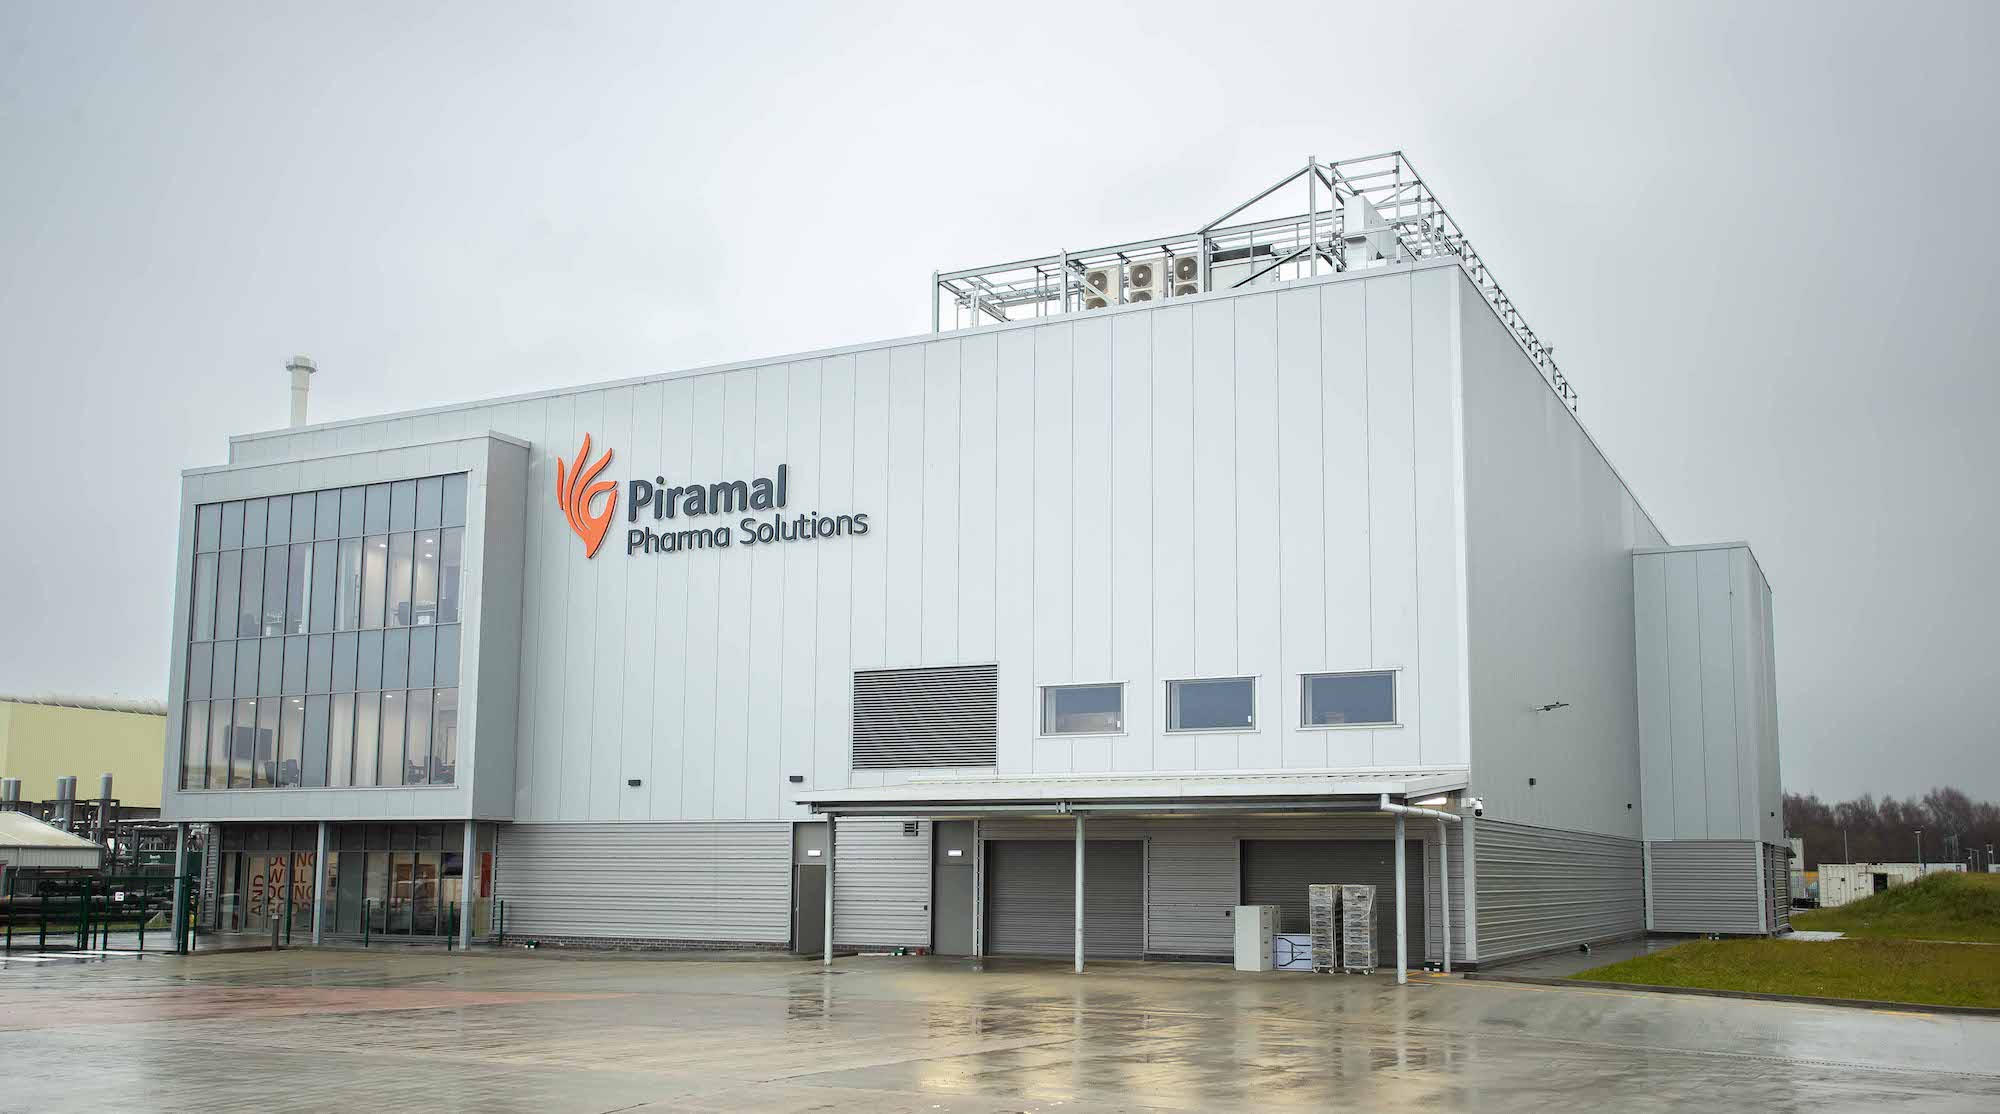 Piramal Pharma Solutions unveils £45m Grangemouth ADC facility expansion